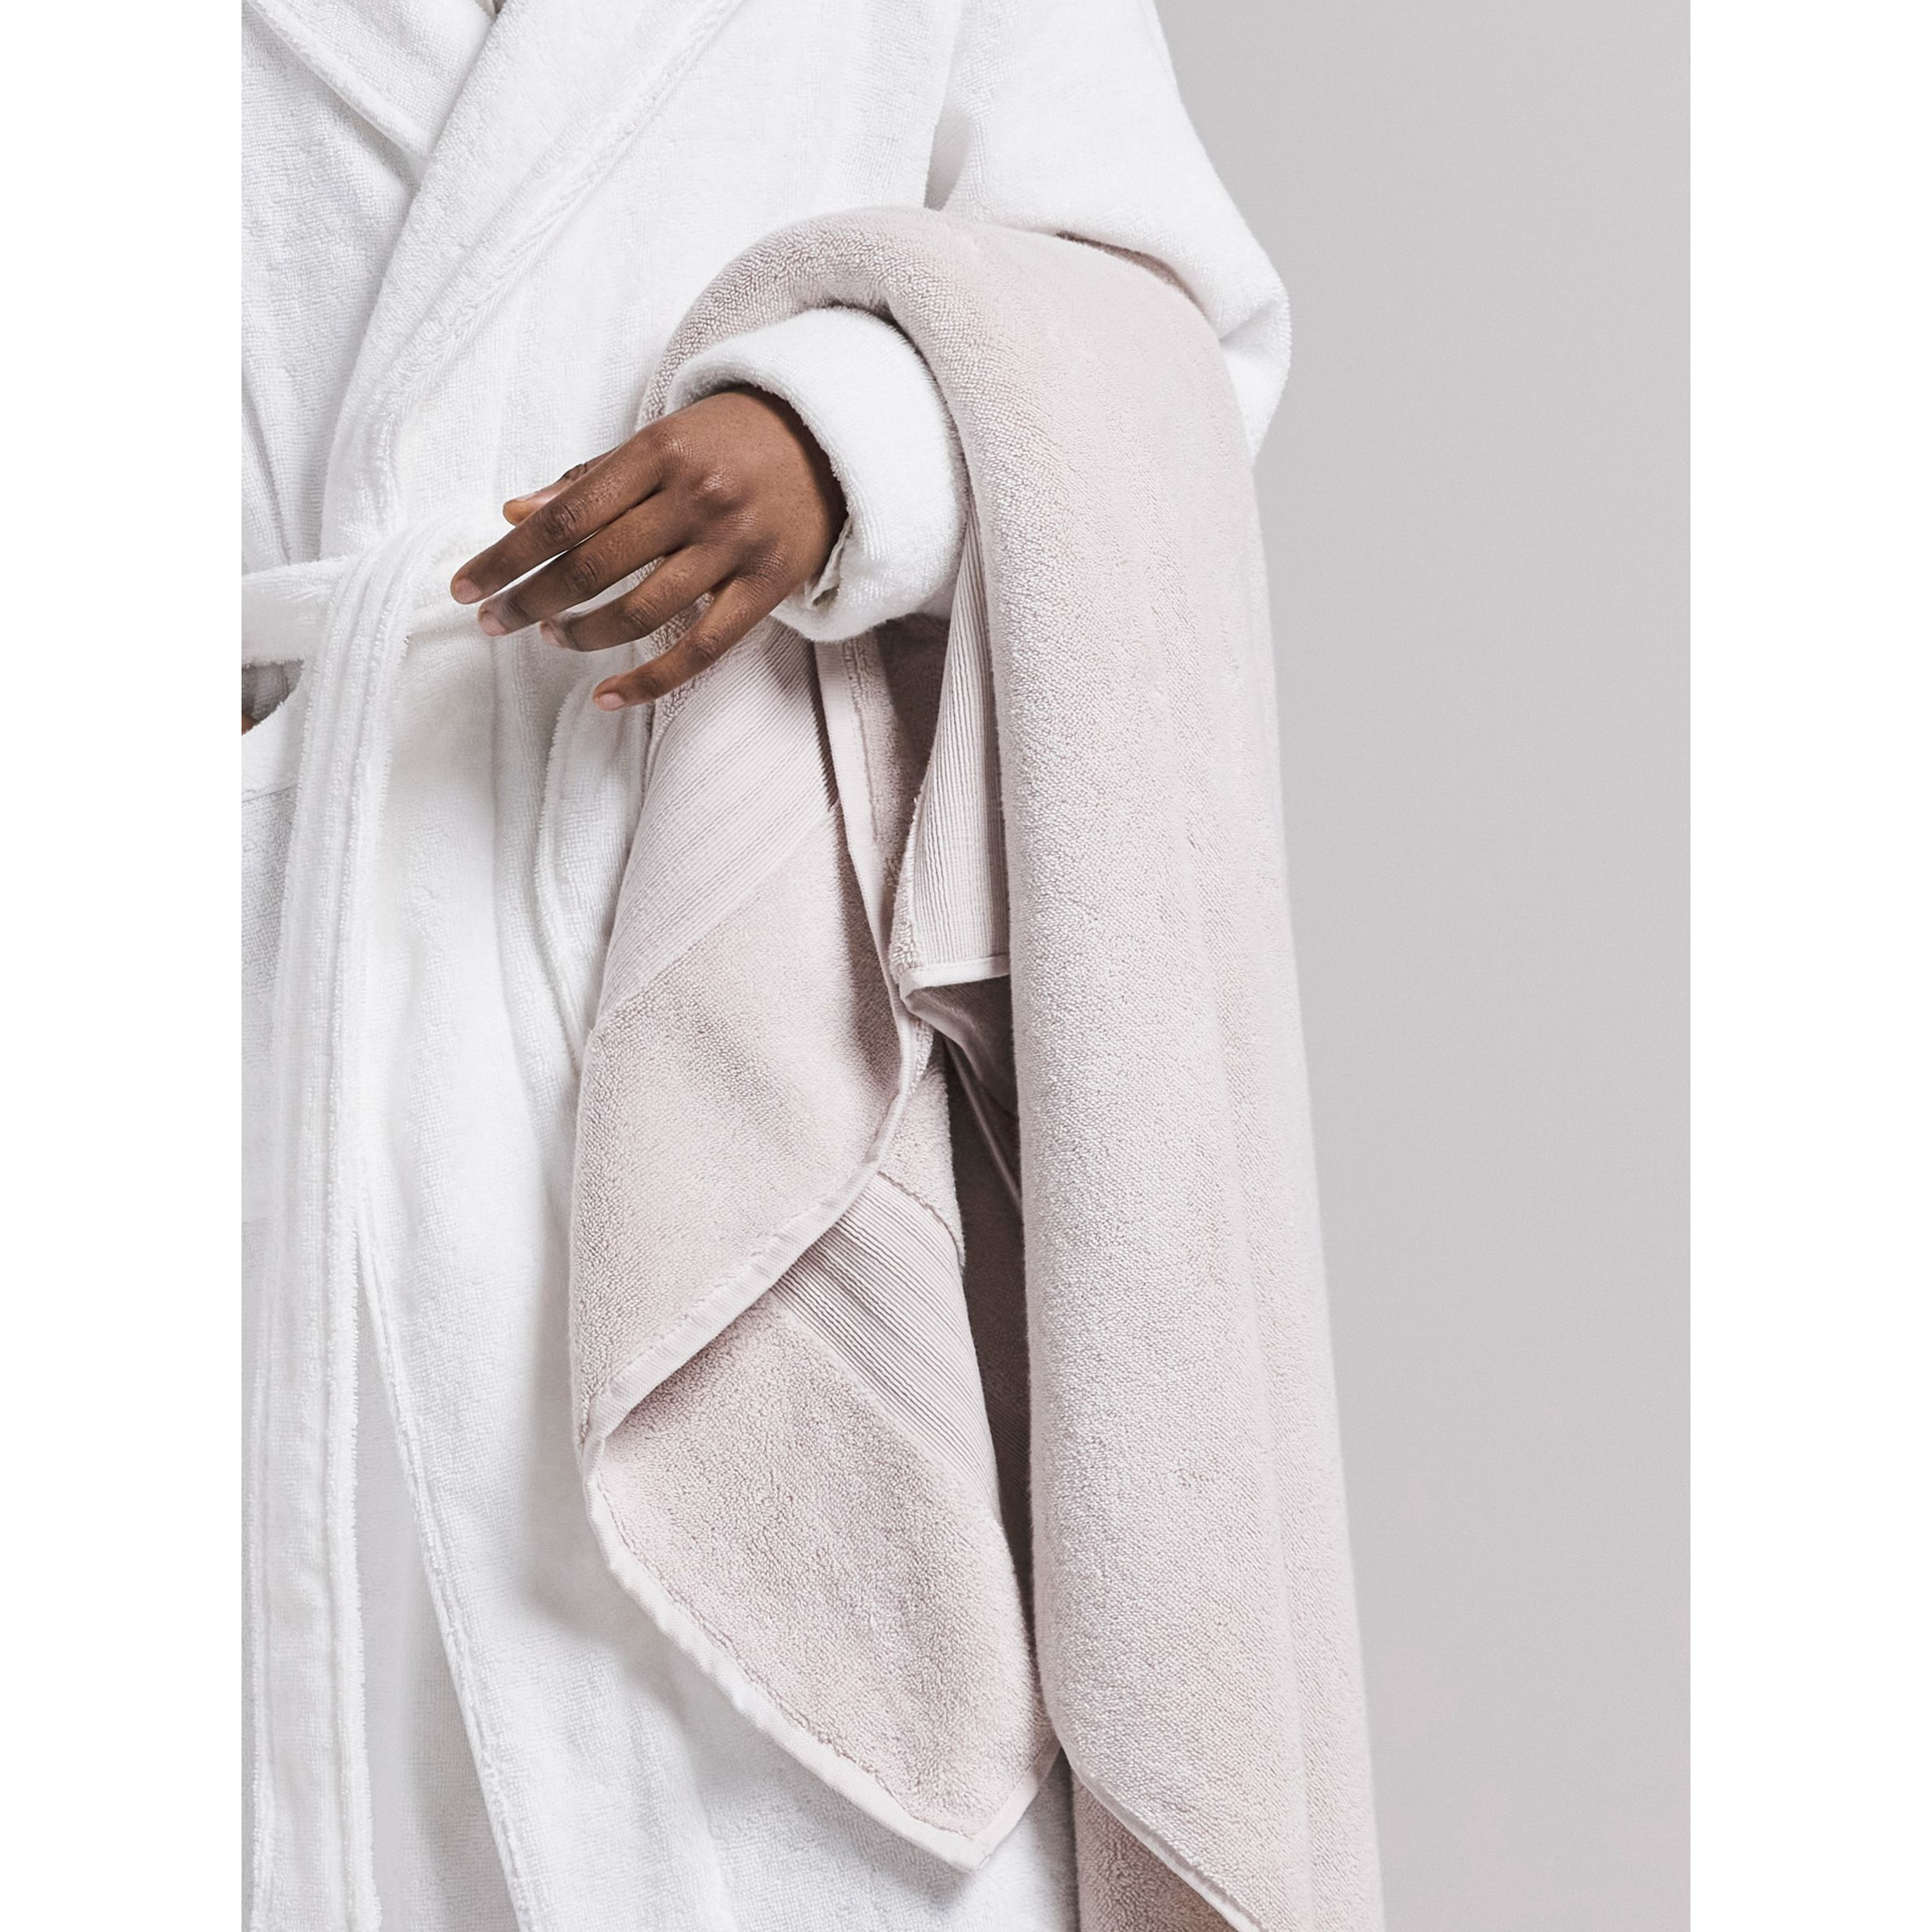 Bedfolk Plush Cotton Towels by John Lewis & Partners